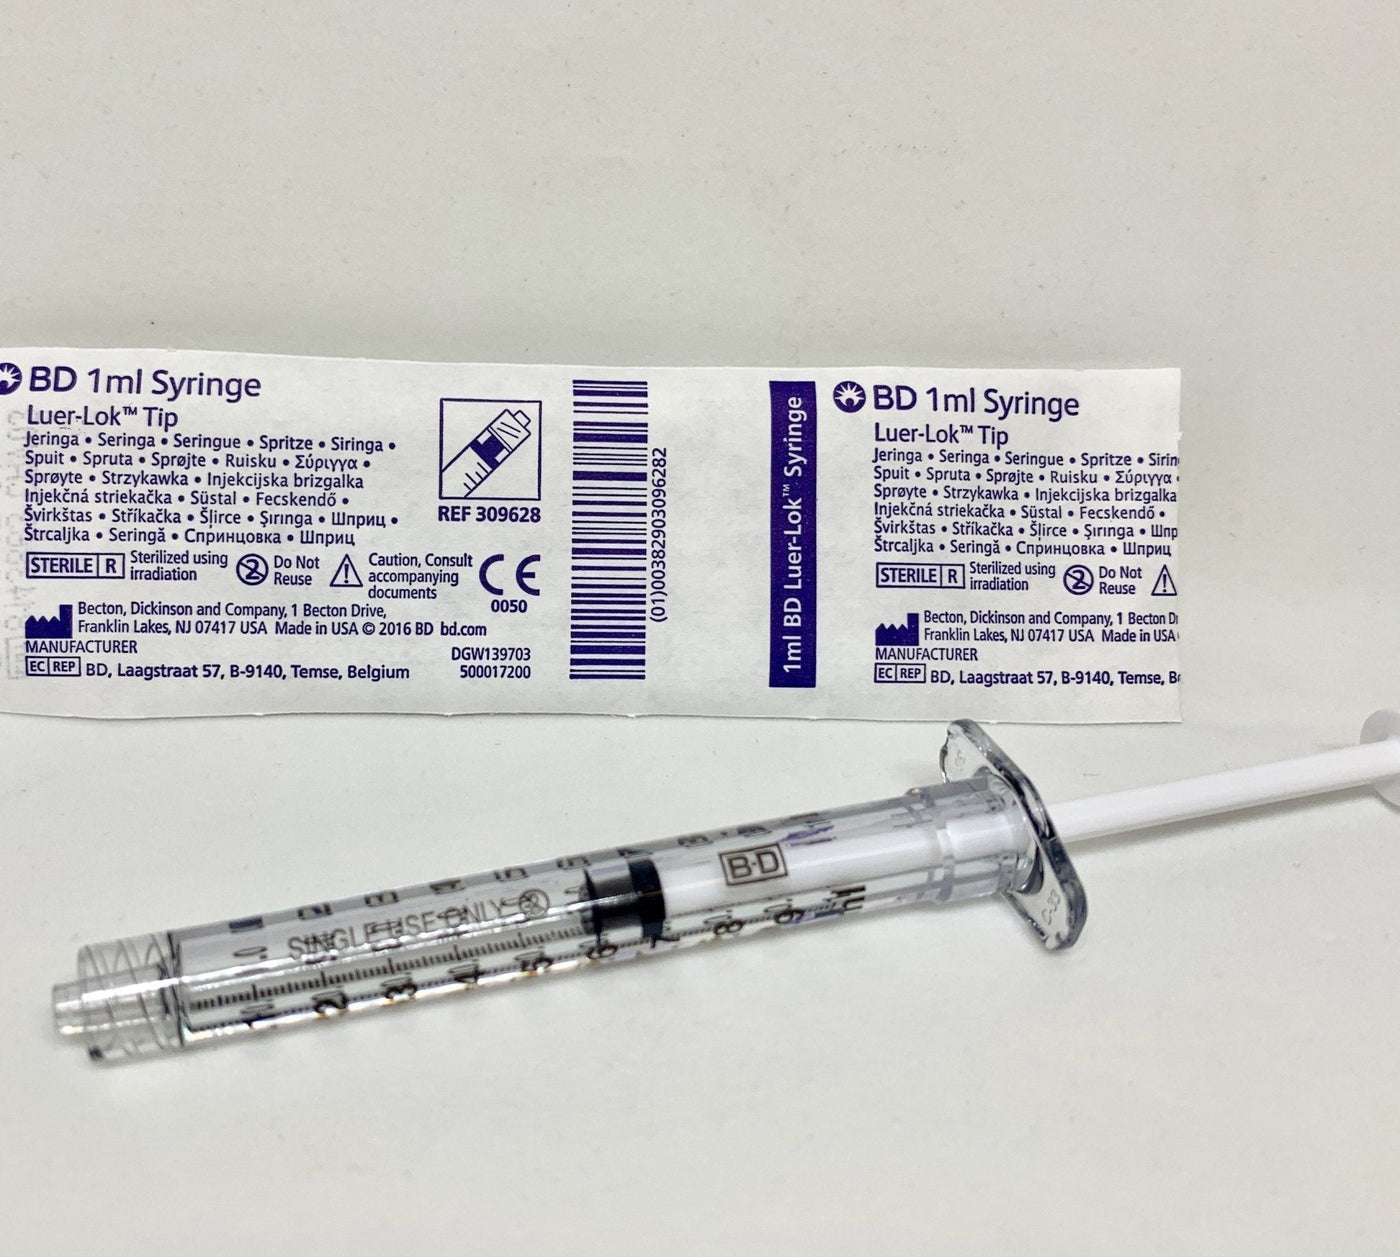 1cc Syringes - Luer Lock | BD